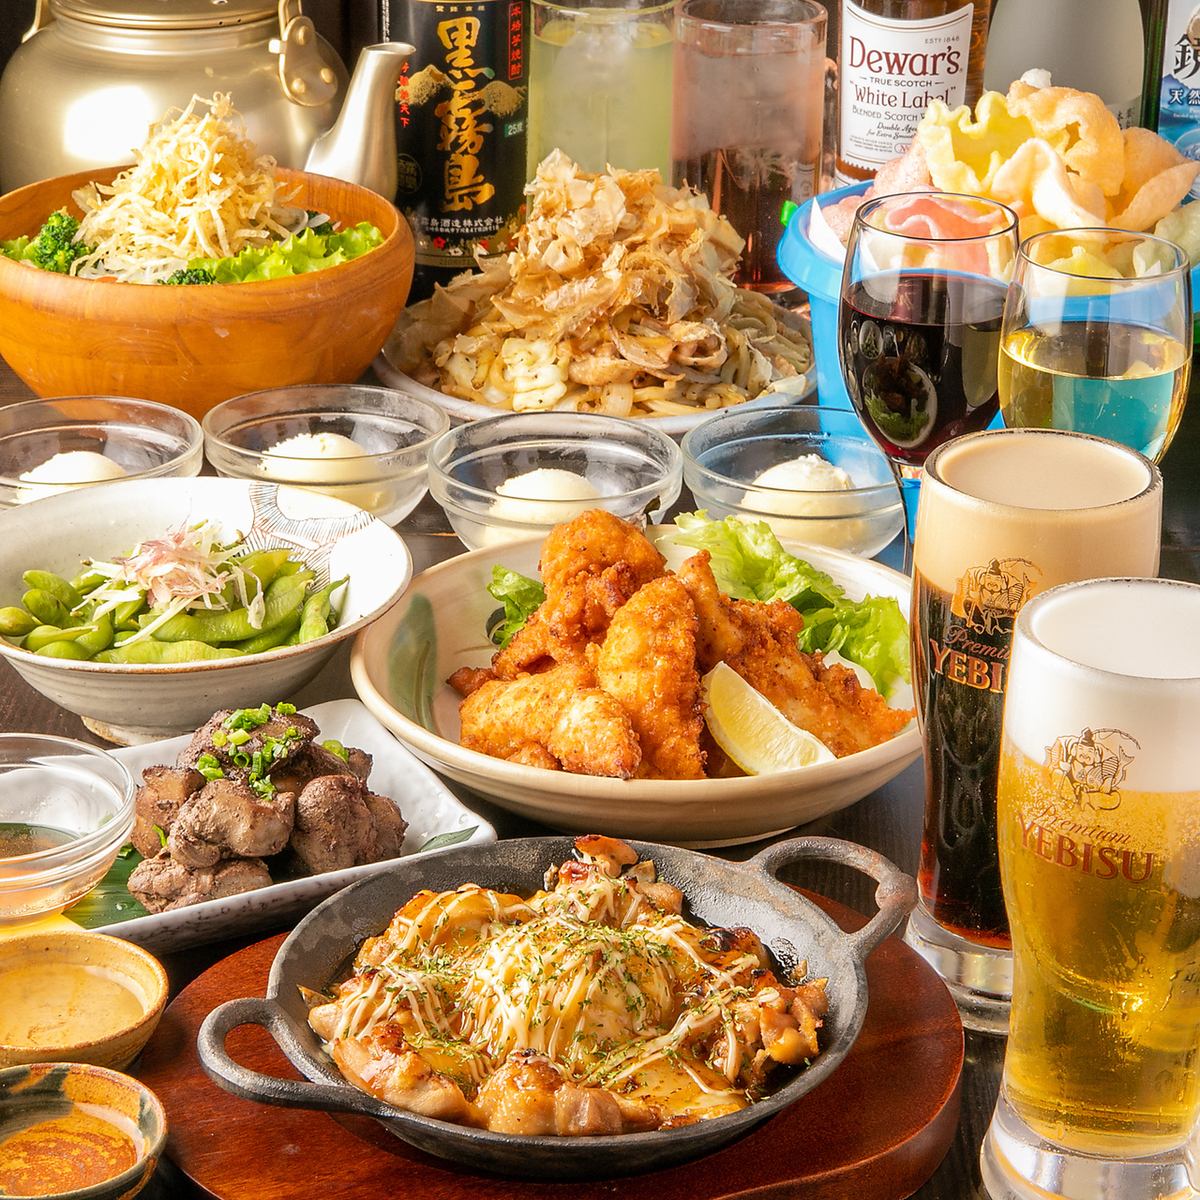 [Soshigaya Okura]我們提供包括惠比壽生啤酒在內的55種無限暢飲套餐3000日元起♪